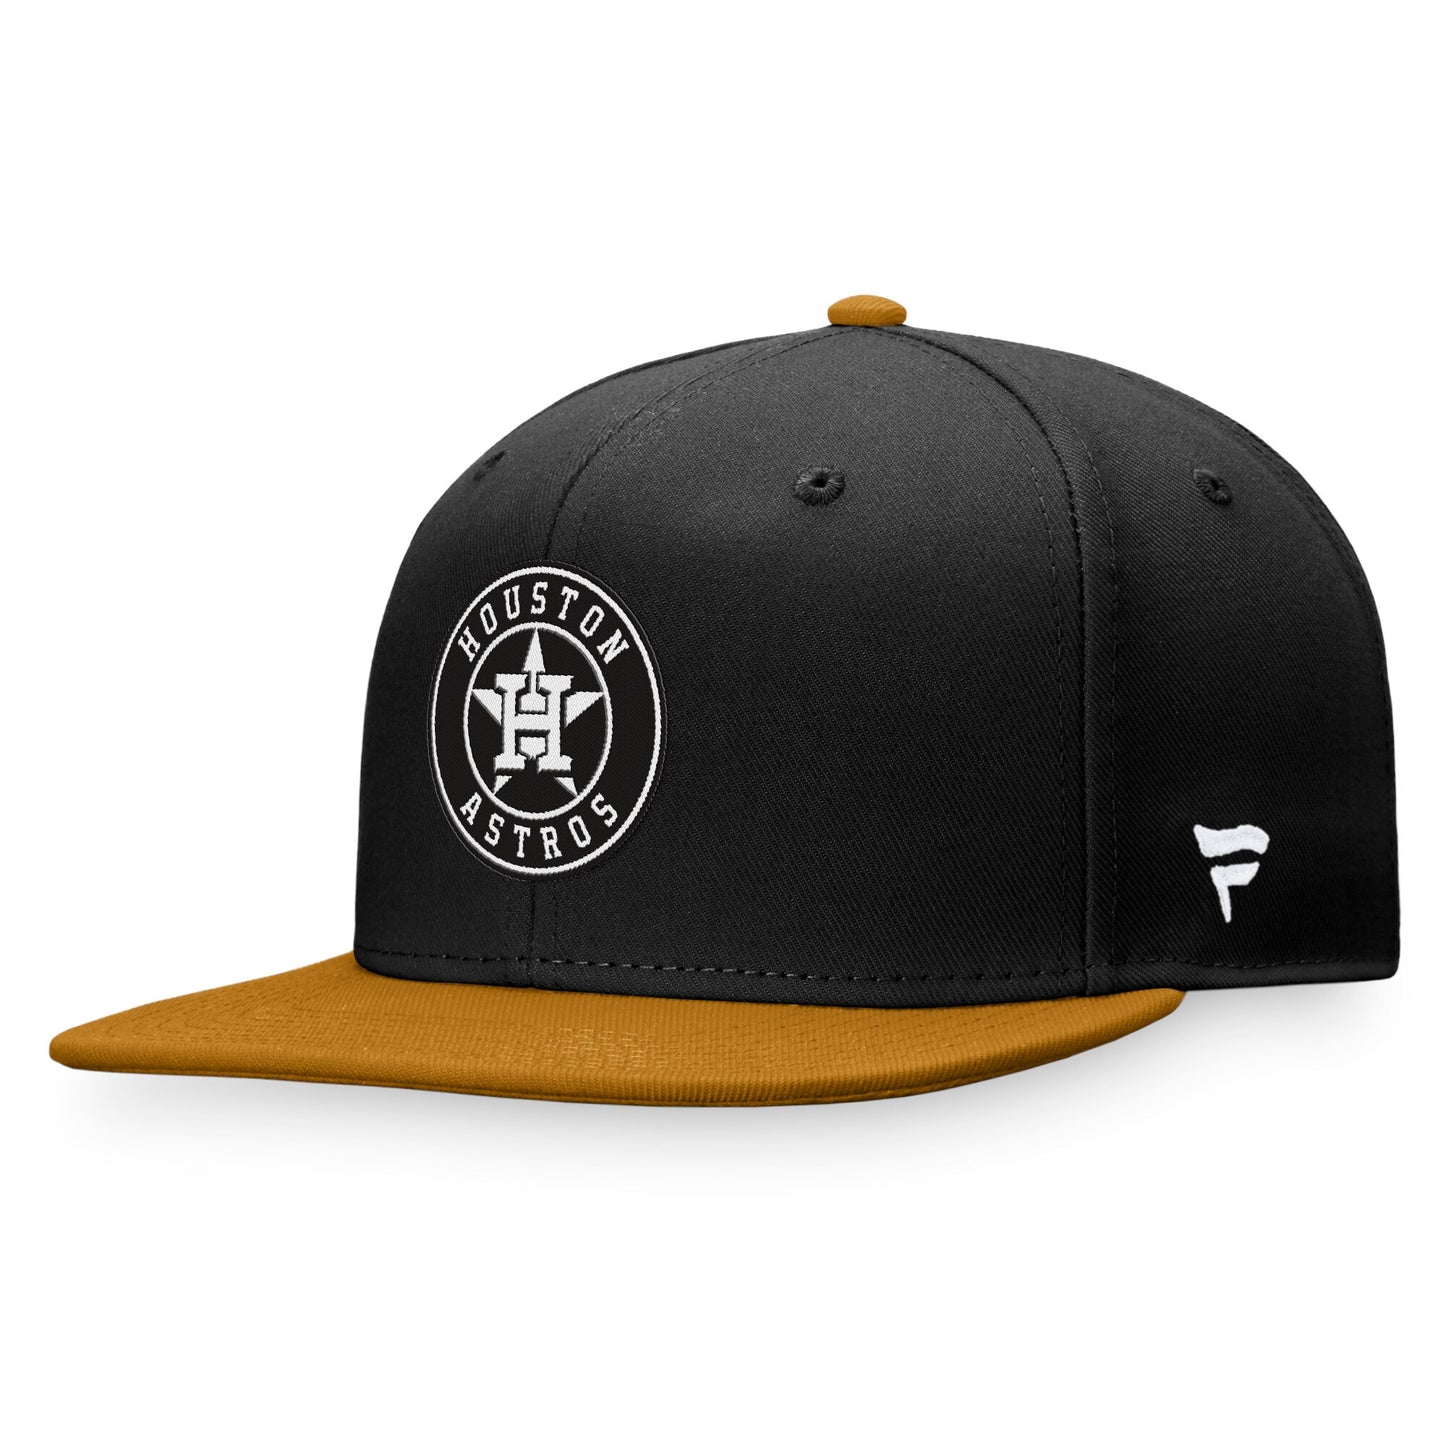 Houston Astros Fanatics Branded Fitted Hat - Black/Khaki